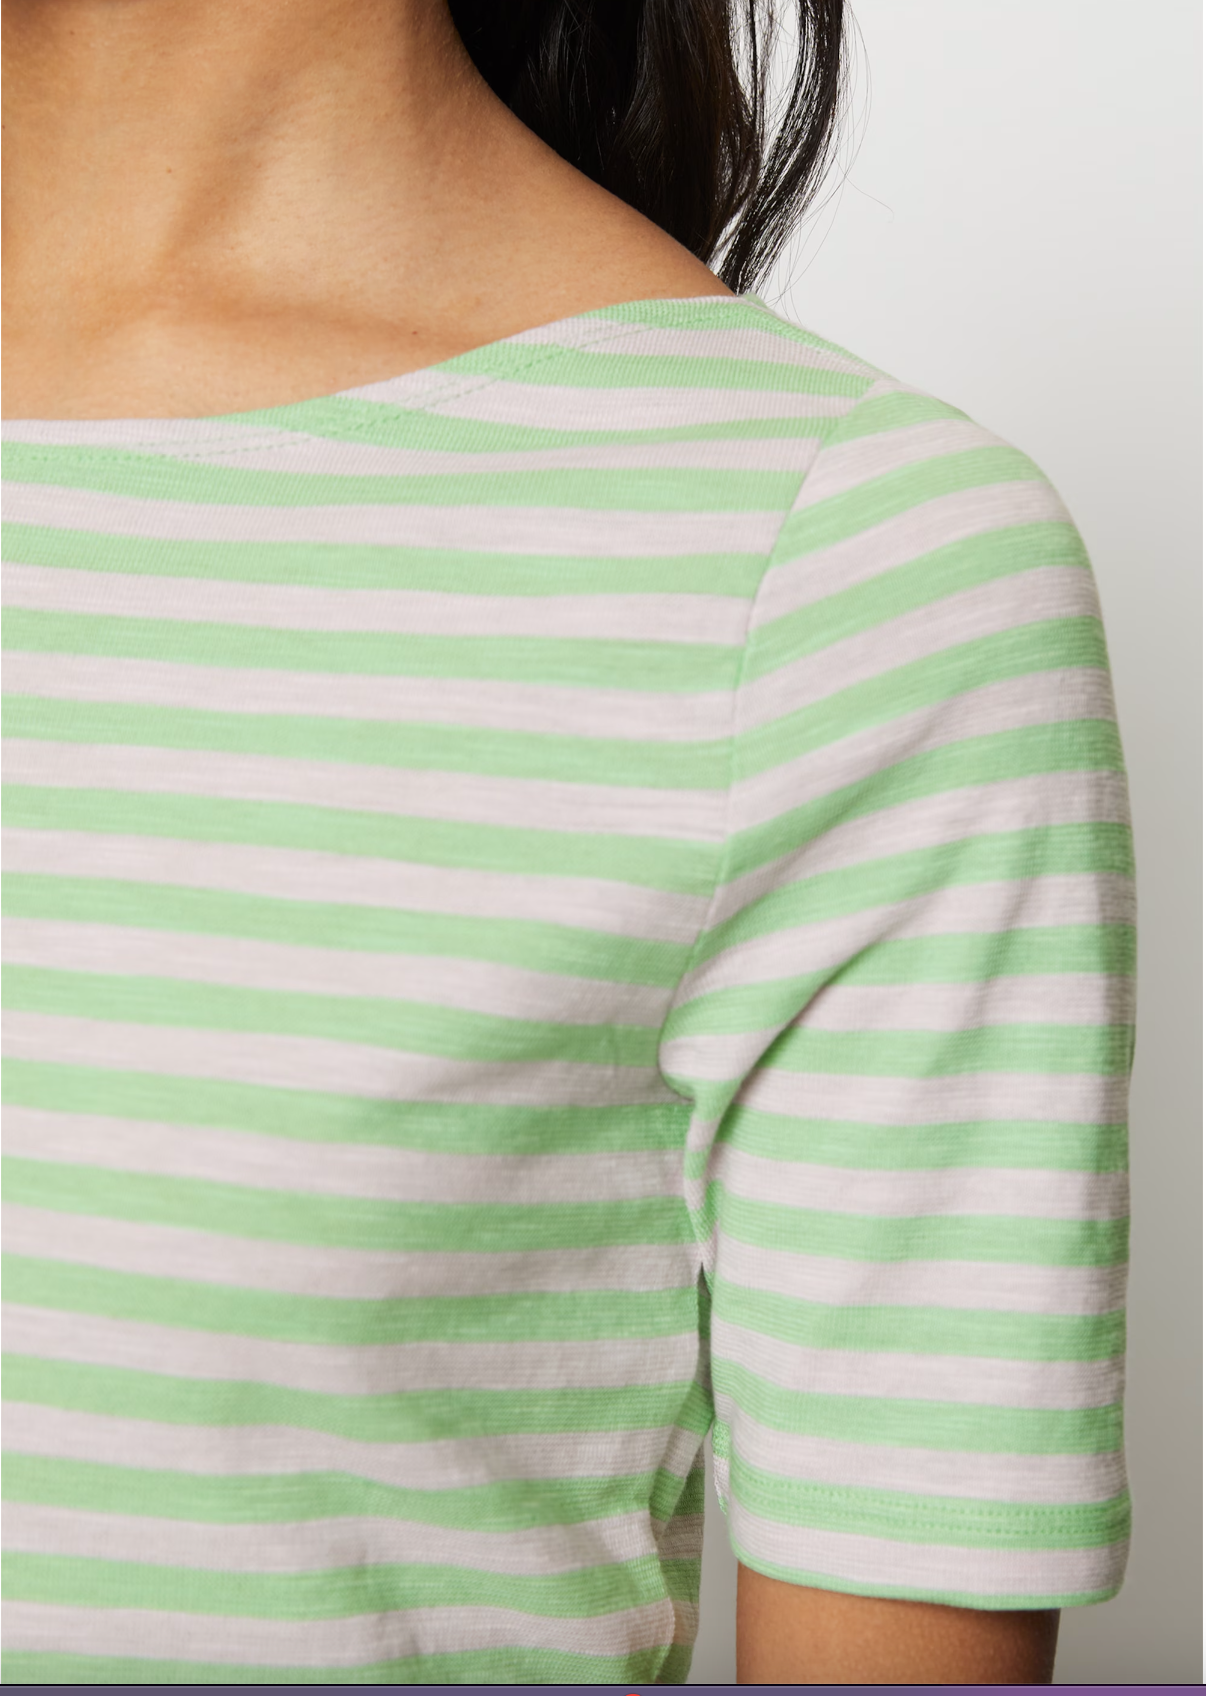 Marc O Polo Pink & Pure Mint Stripe T-Shirt